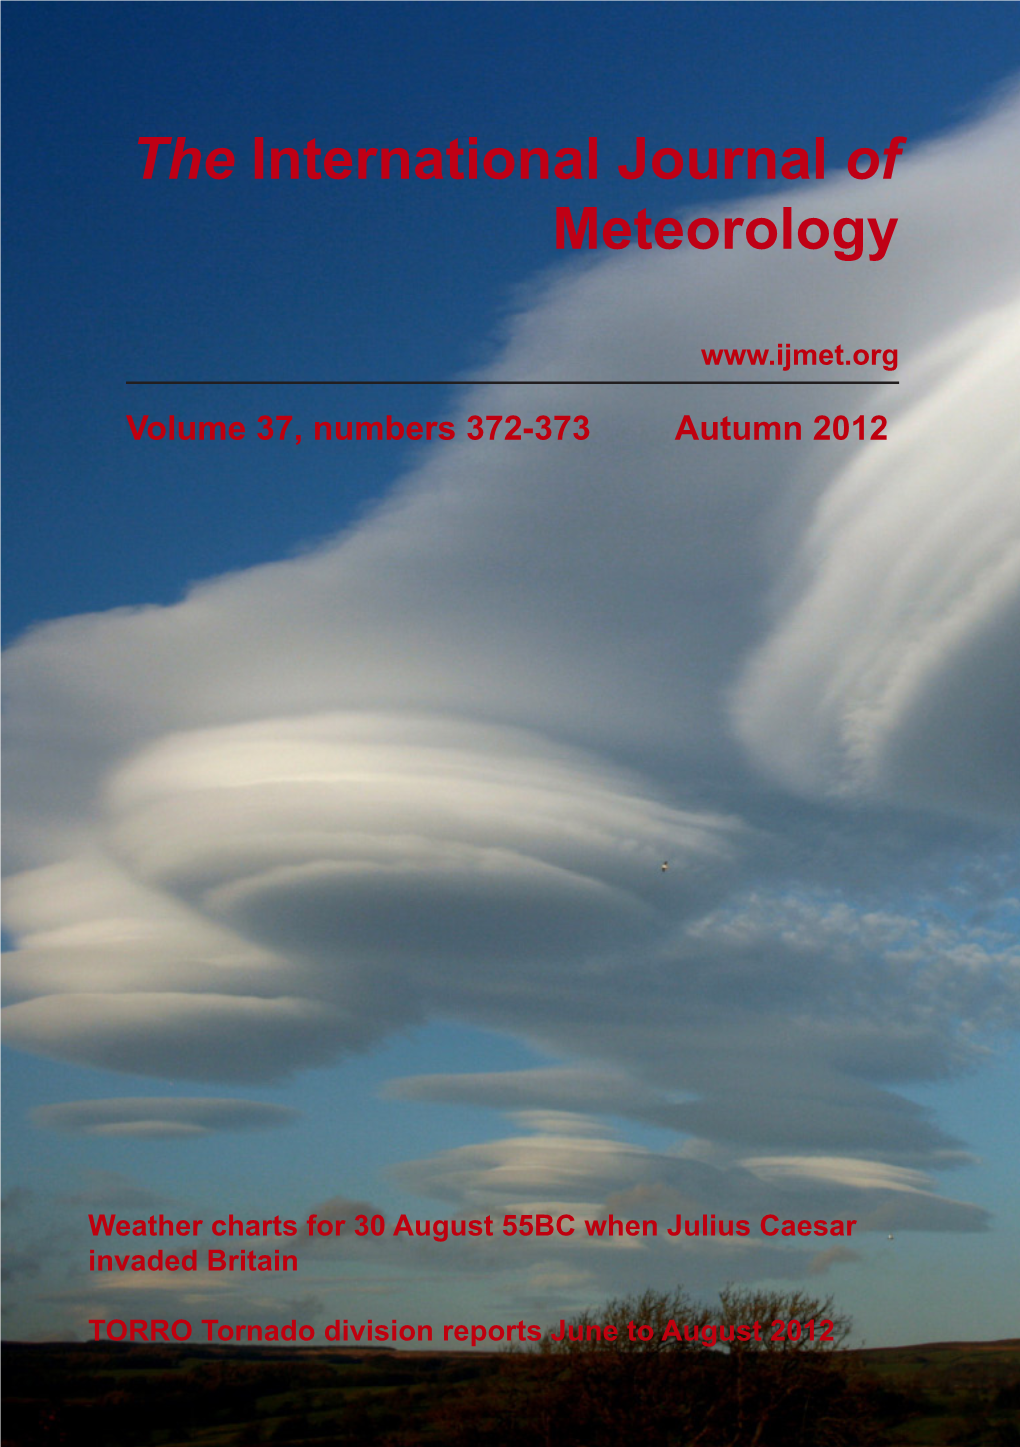 The International Journal of Meteorology